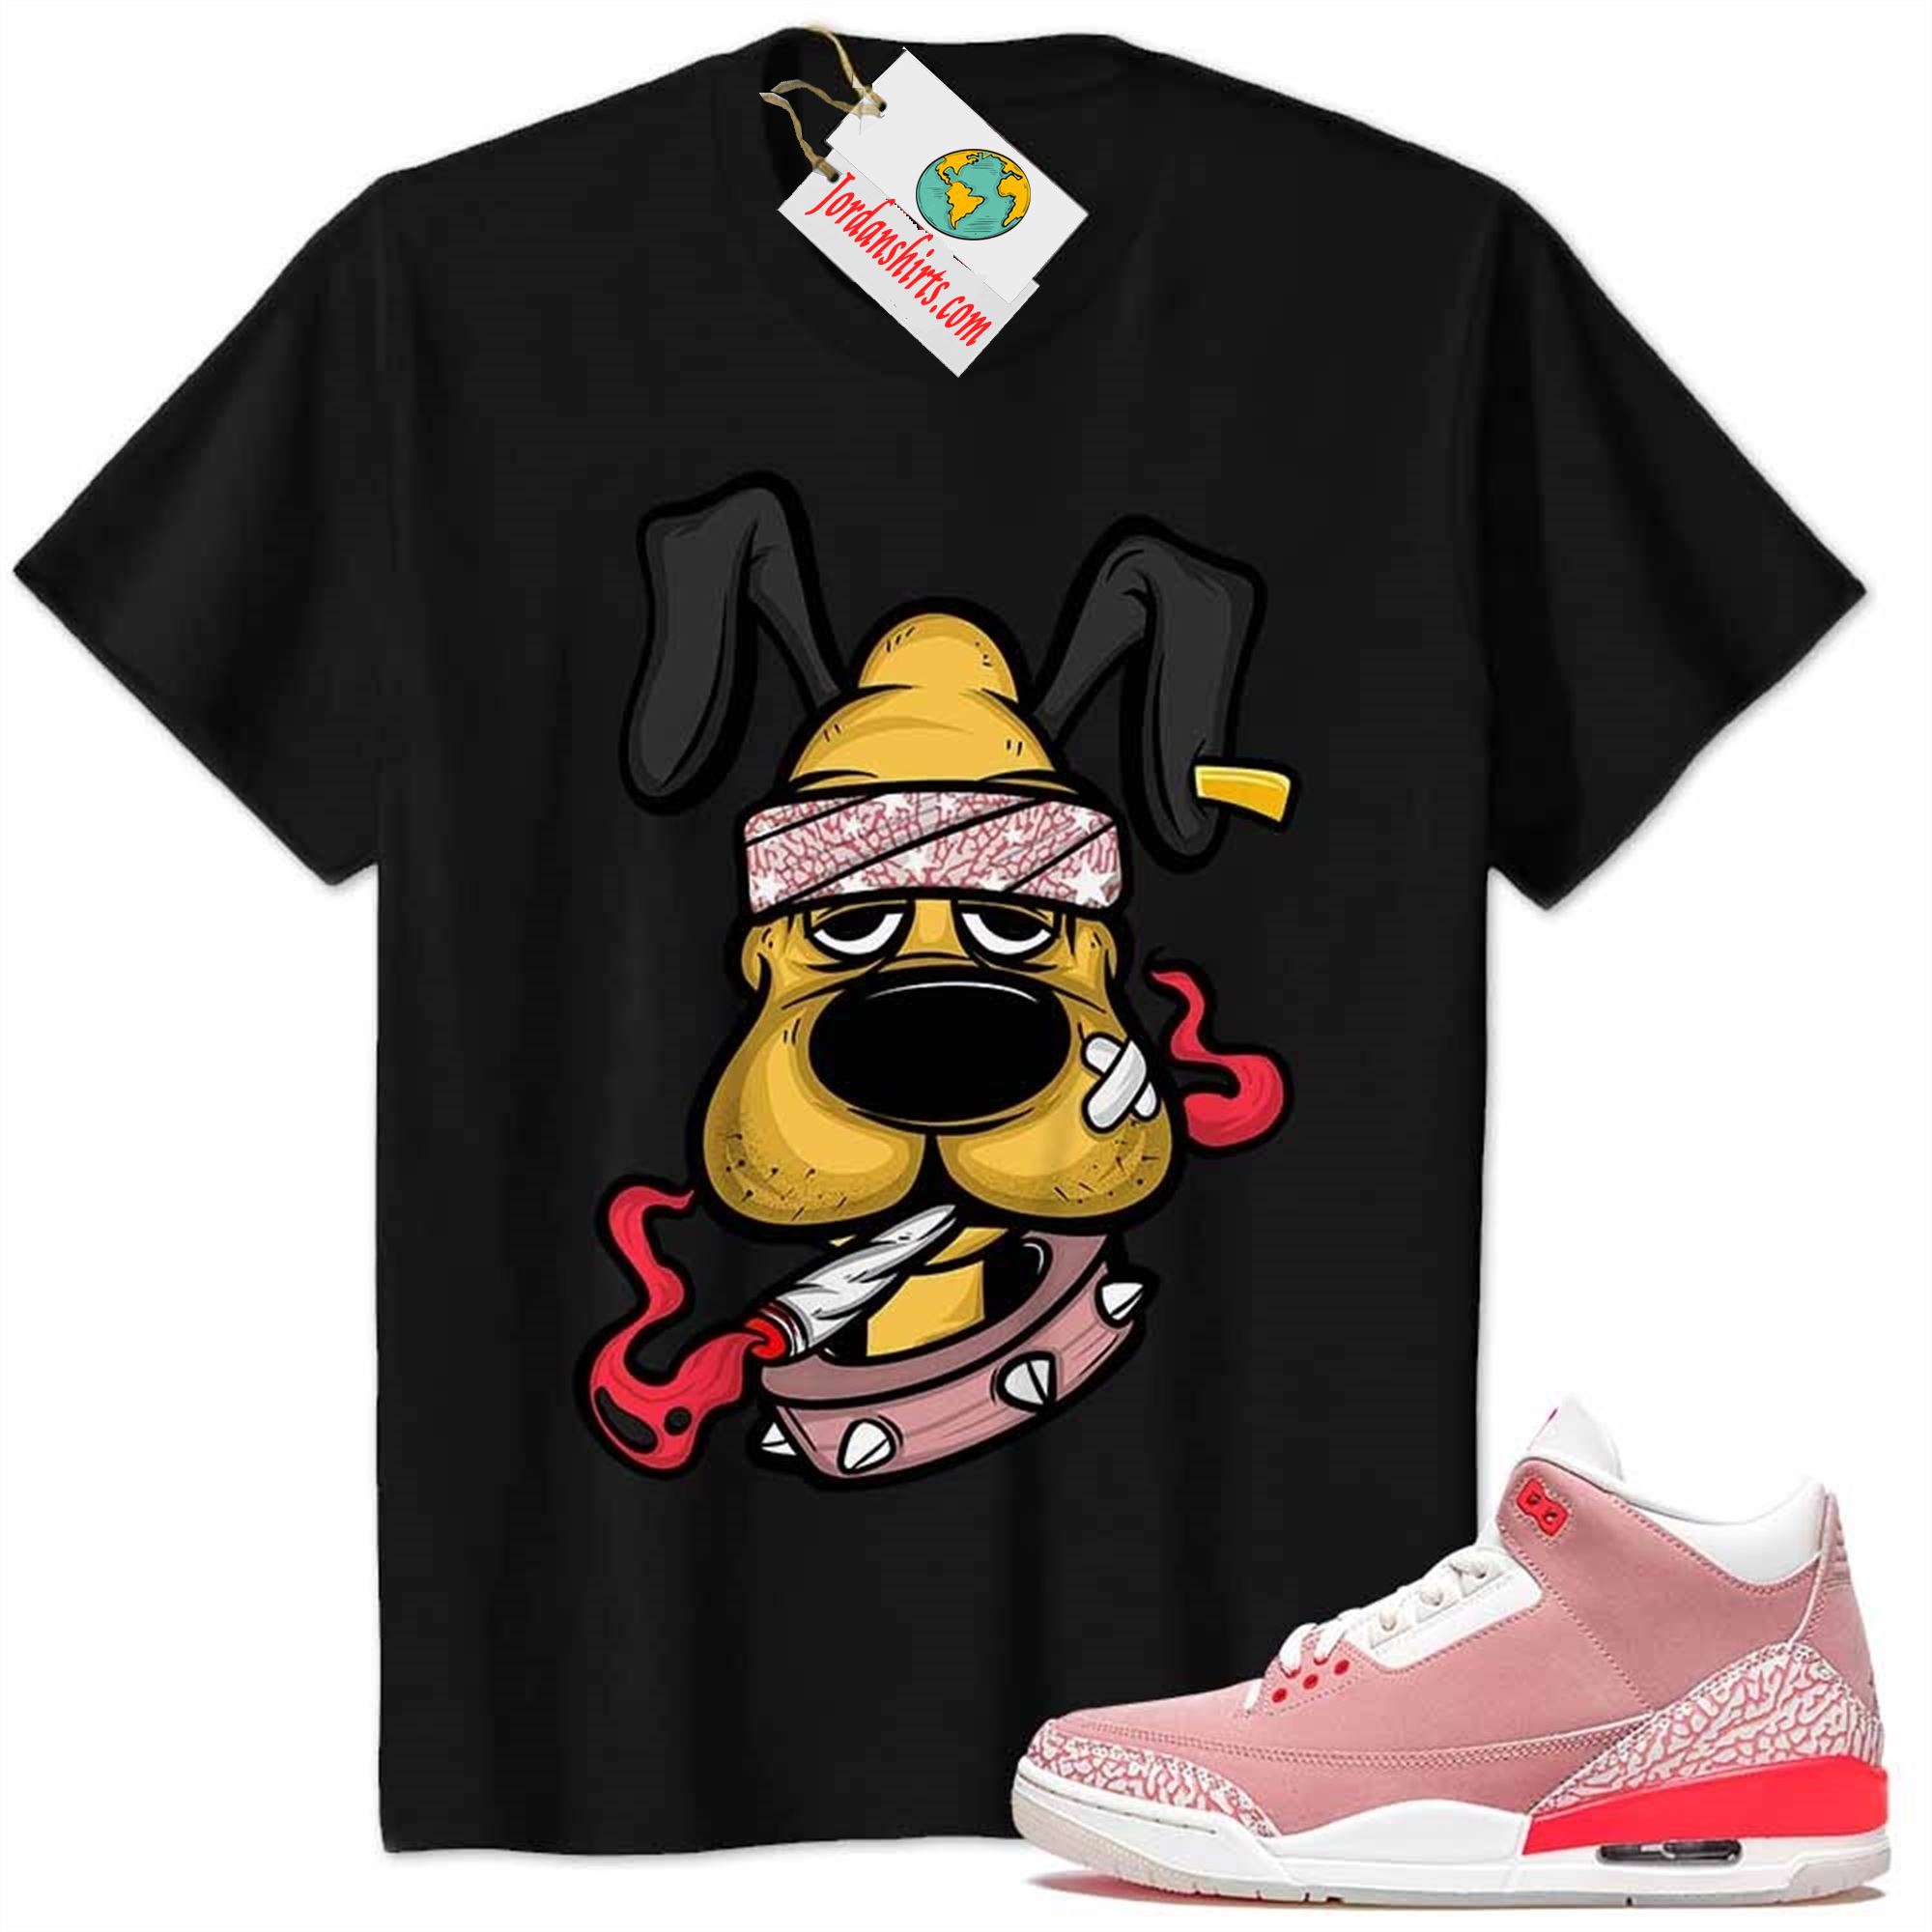 Jordan 3 Shirt, Gangster Pluto Smoke Weed Black Air Jordan 3 Rust Pink 3s Size Up To 5xl